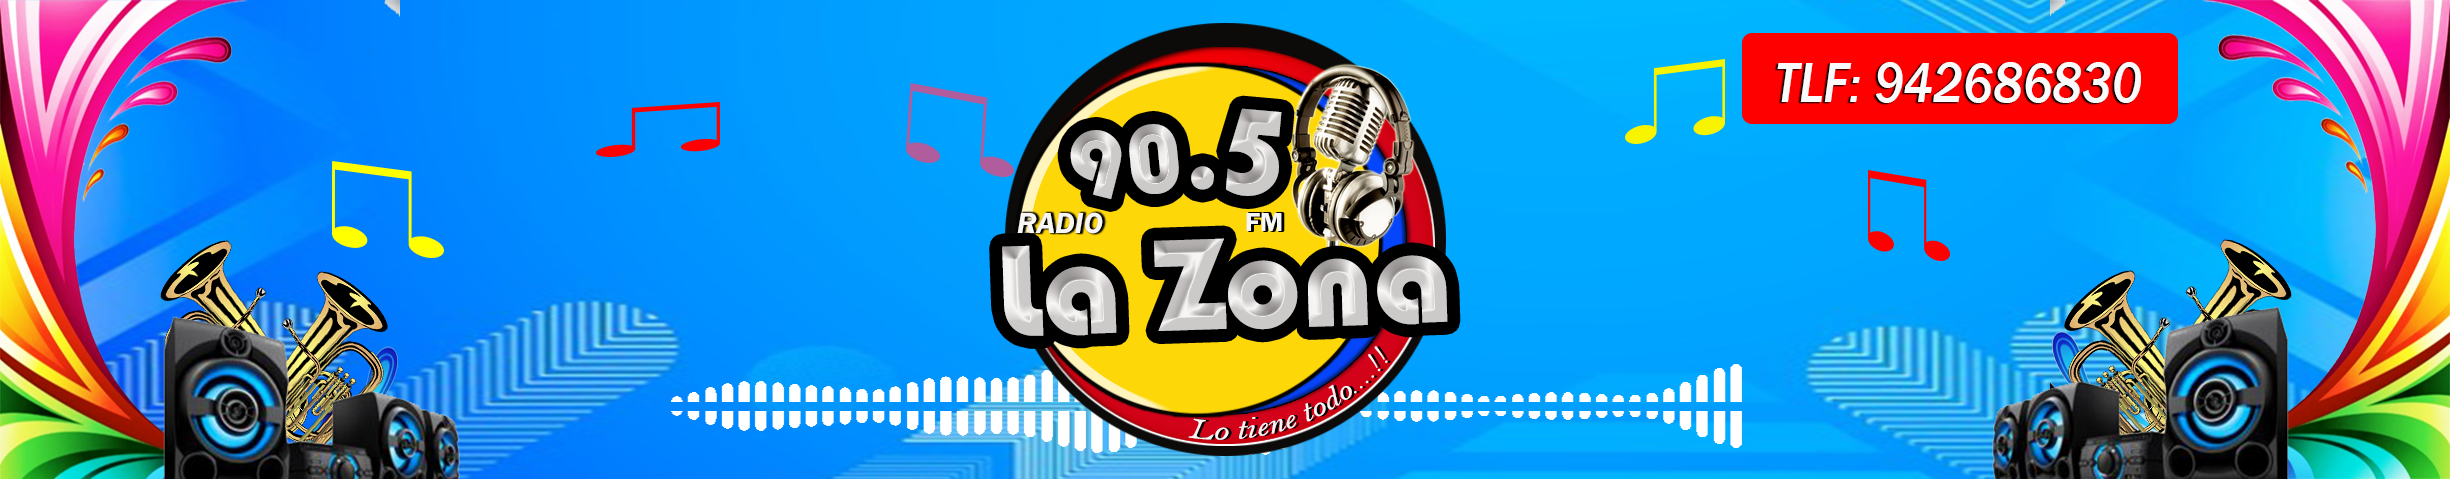 Radio La Zona 90.5 fm ..::.. Lo Tiene Todo